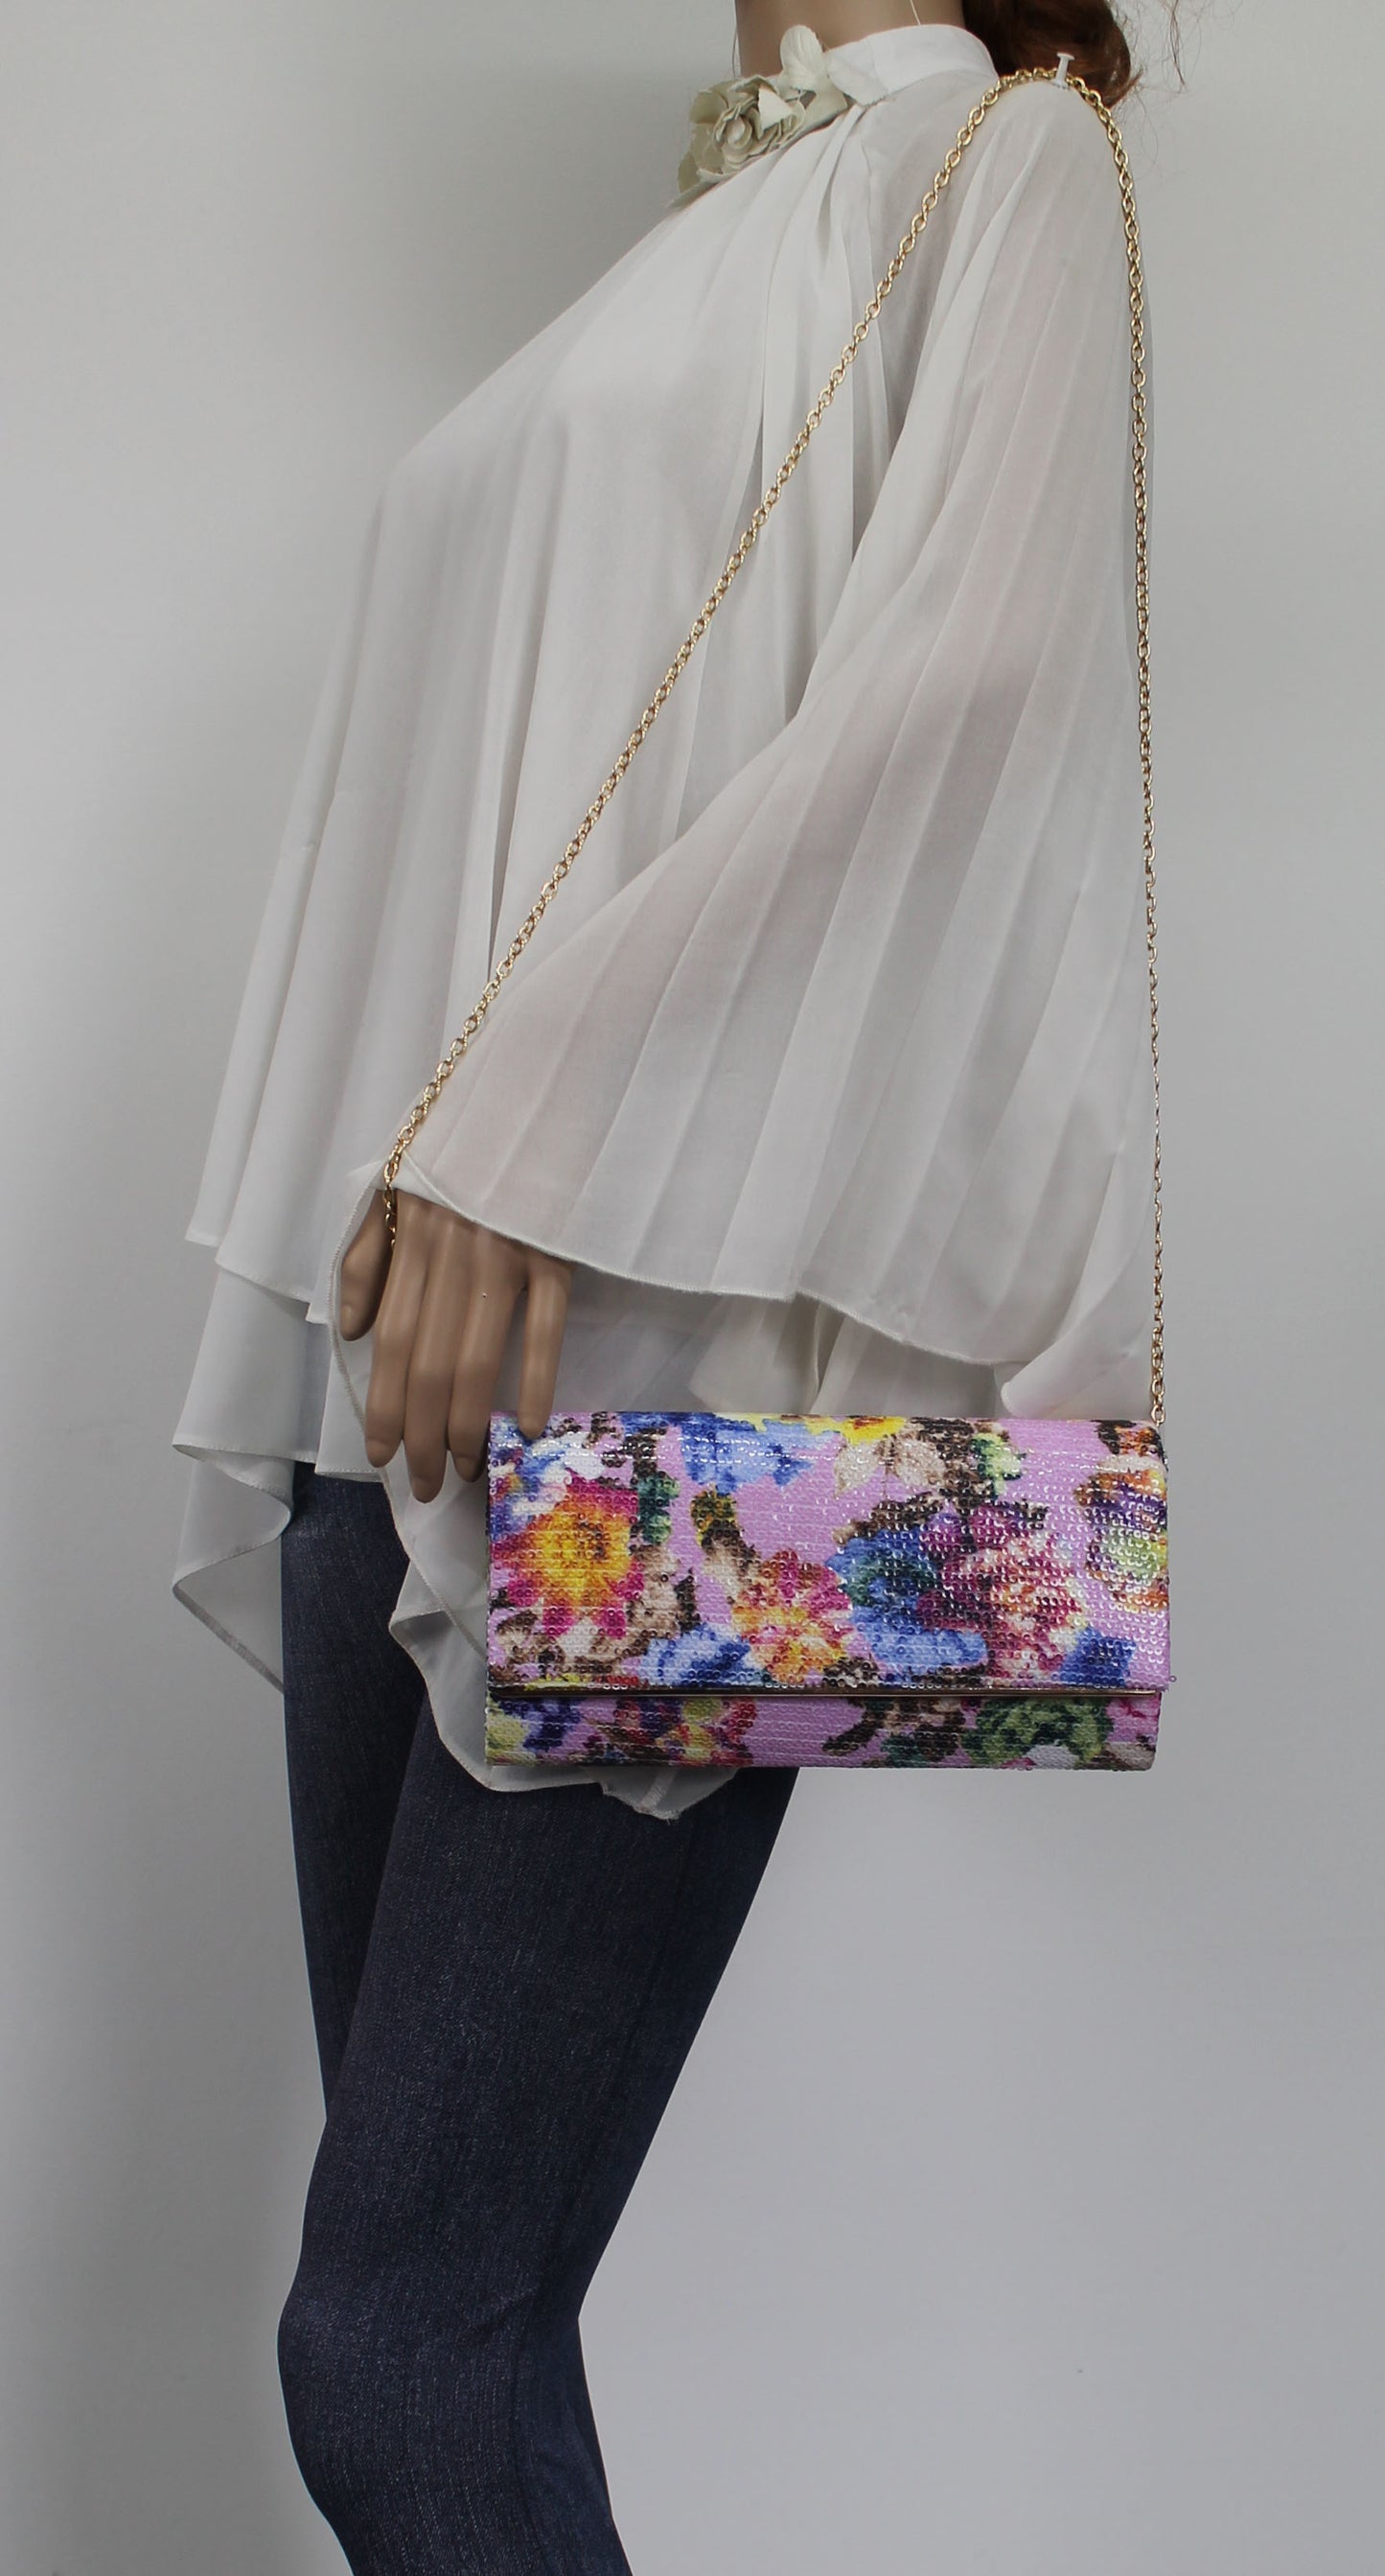 SWANKYSWANS Kyra Clutch Bag Lilac Cute Cheap Clutch Bag For Weddings School and Work